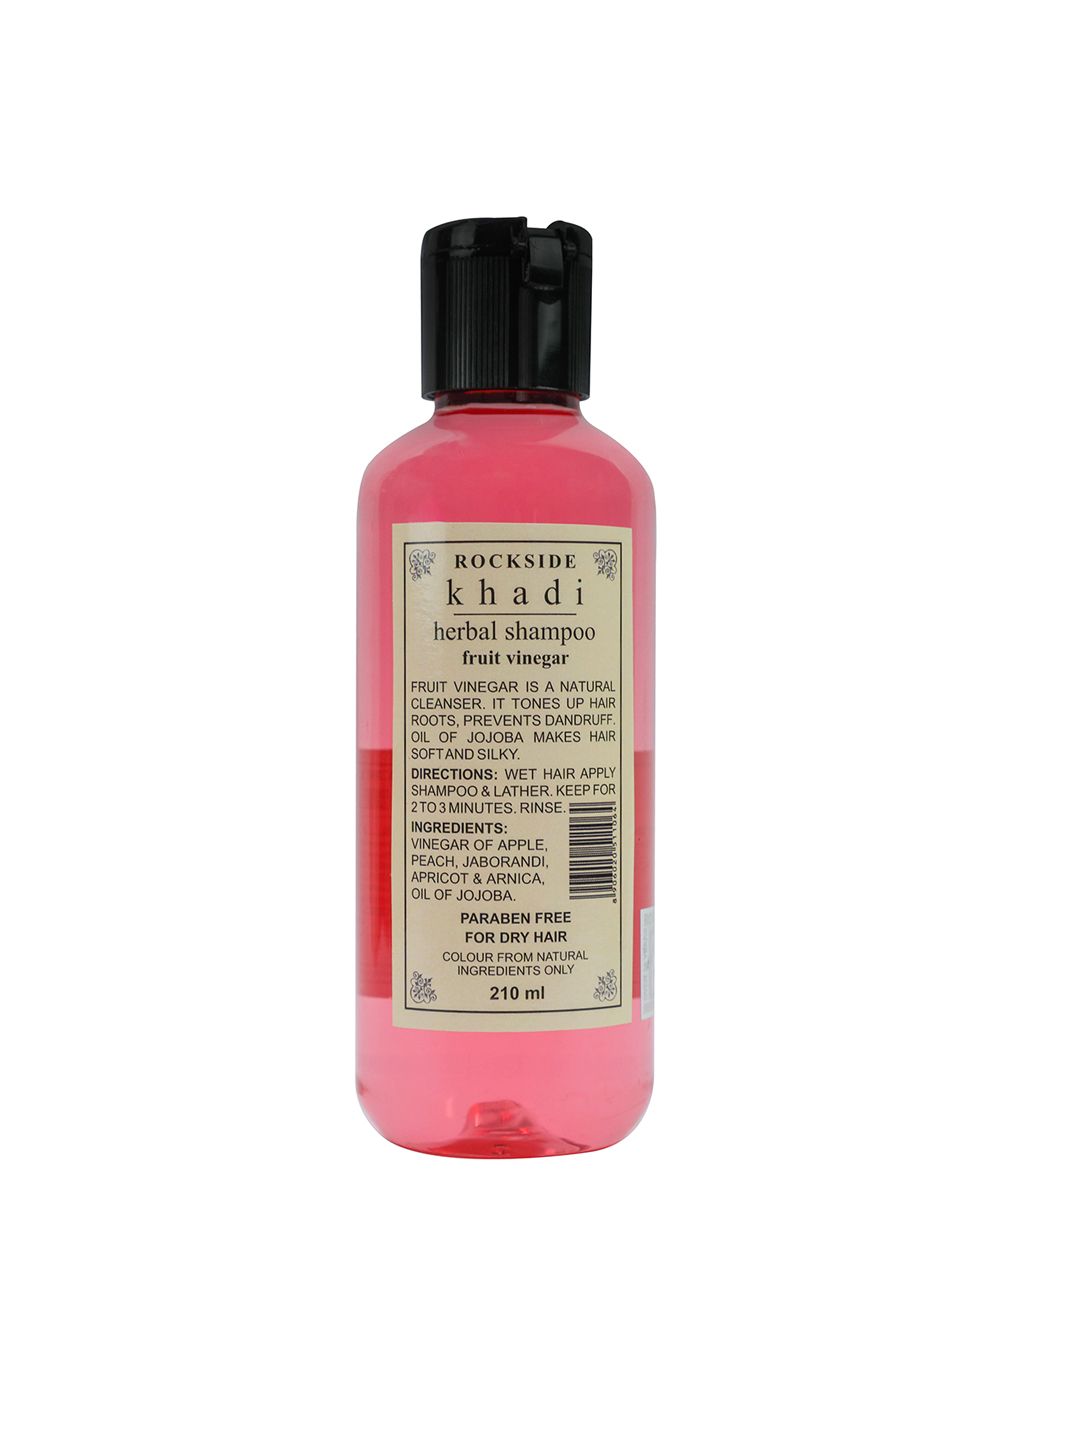 ROCKSIDE KHADI Herbal Fruit Vinegar Shampoo 210ml Price in India